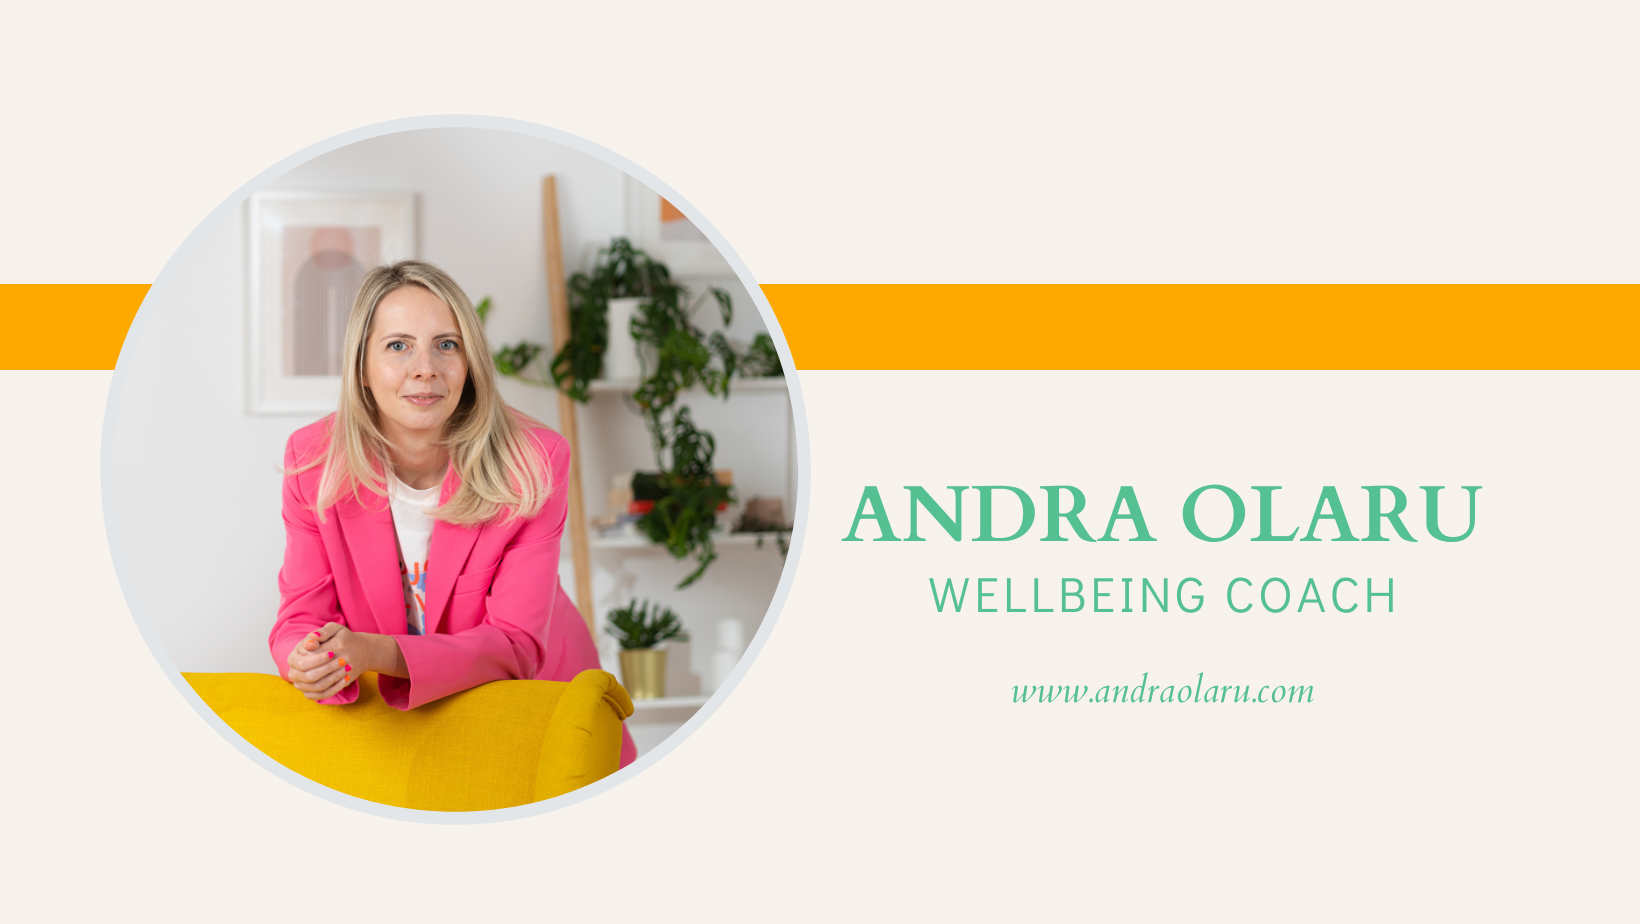 Andra Olaru – Wellbeing Coach